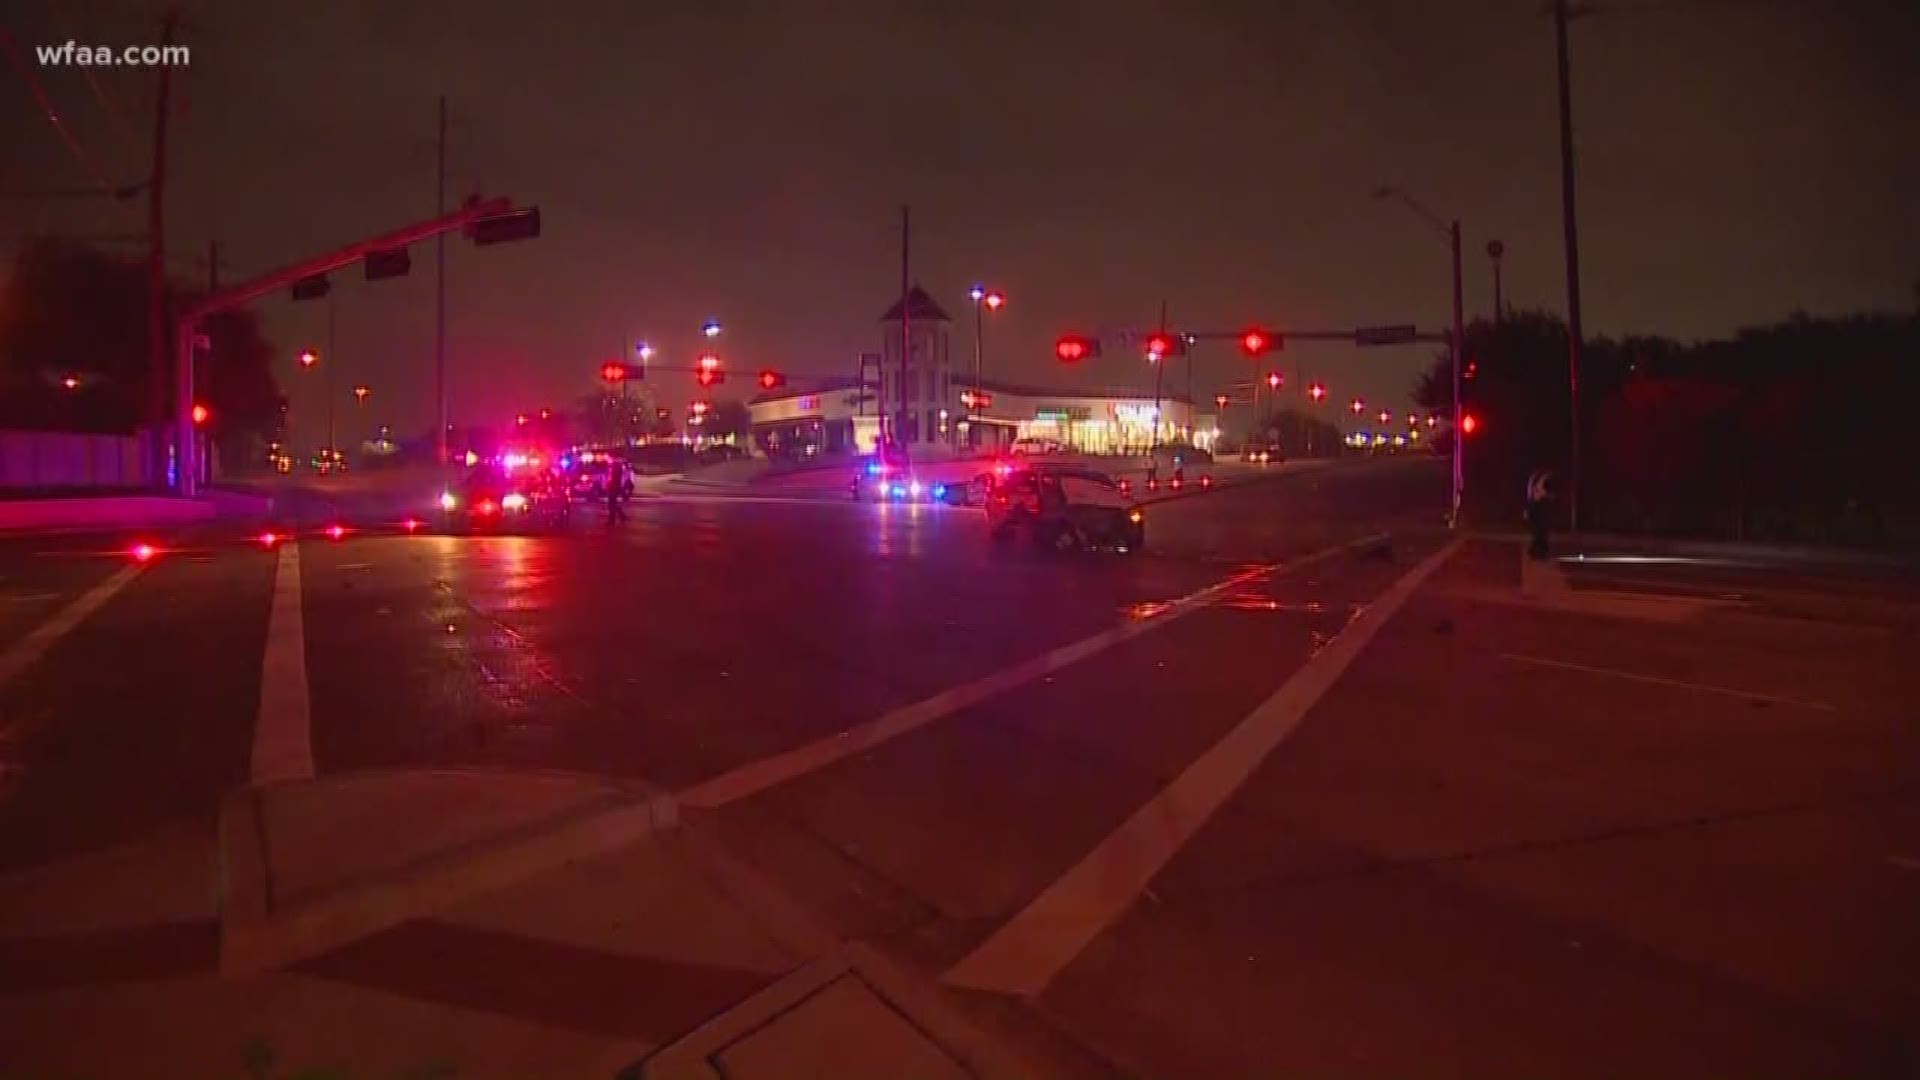 Stolen car involved in a deadly crash in Dallas